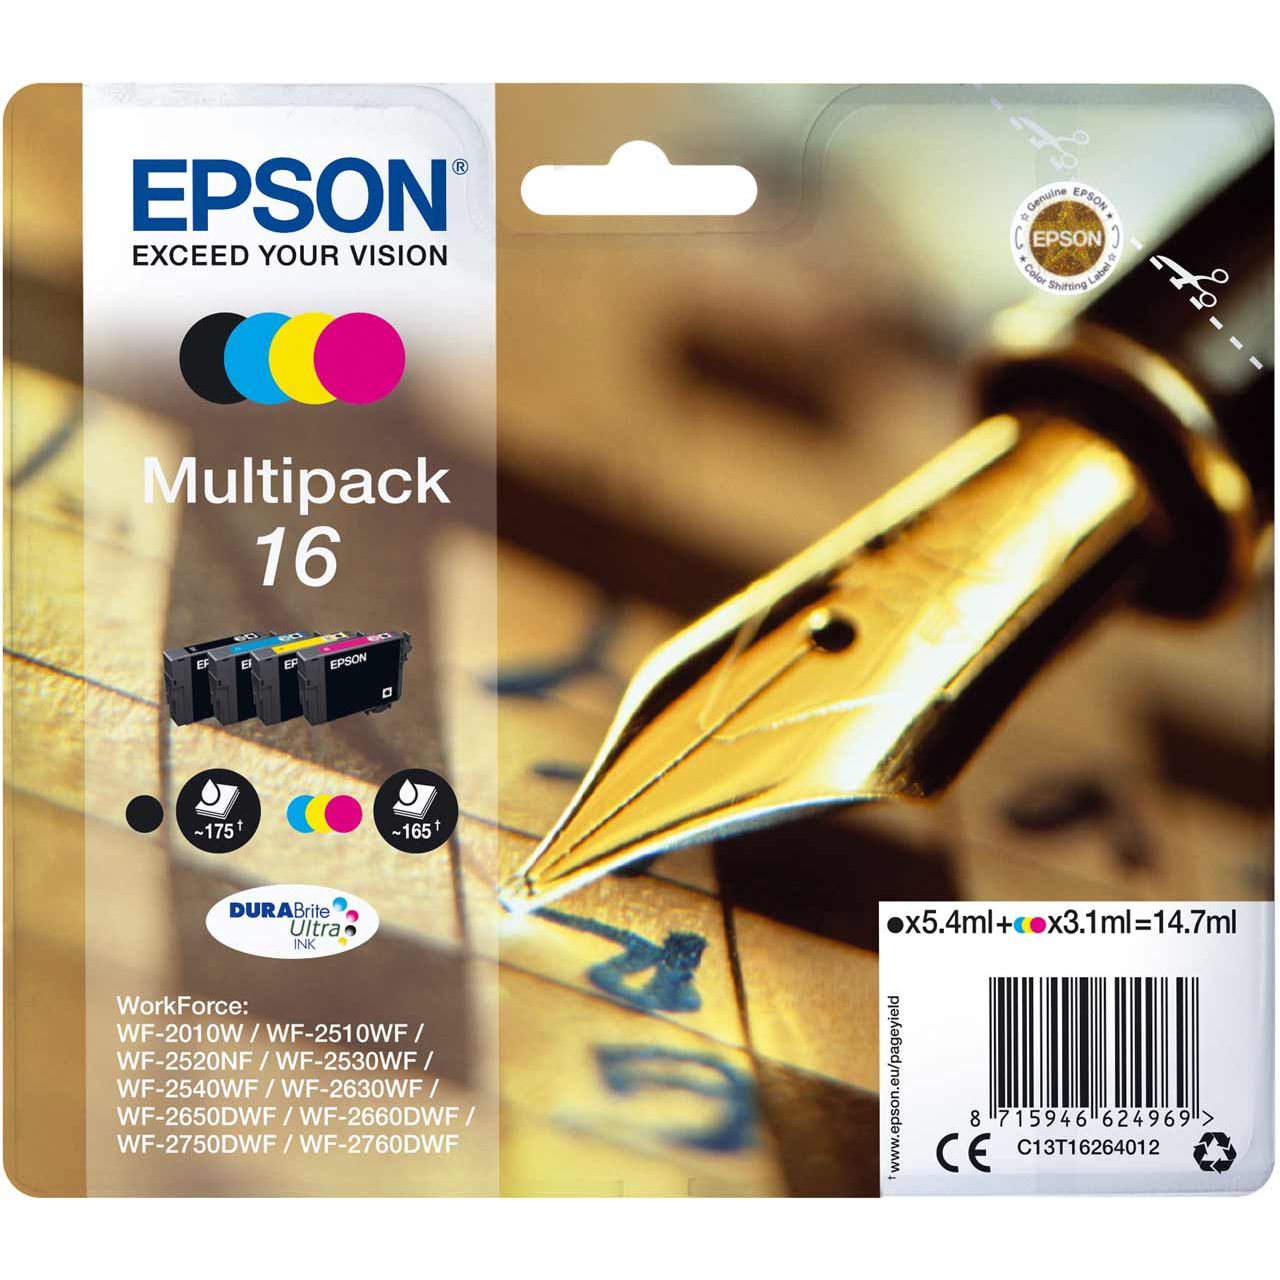 Epson Pen & Crossword 16 Series Multipack Cartridge Review